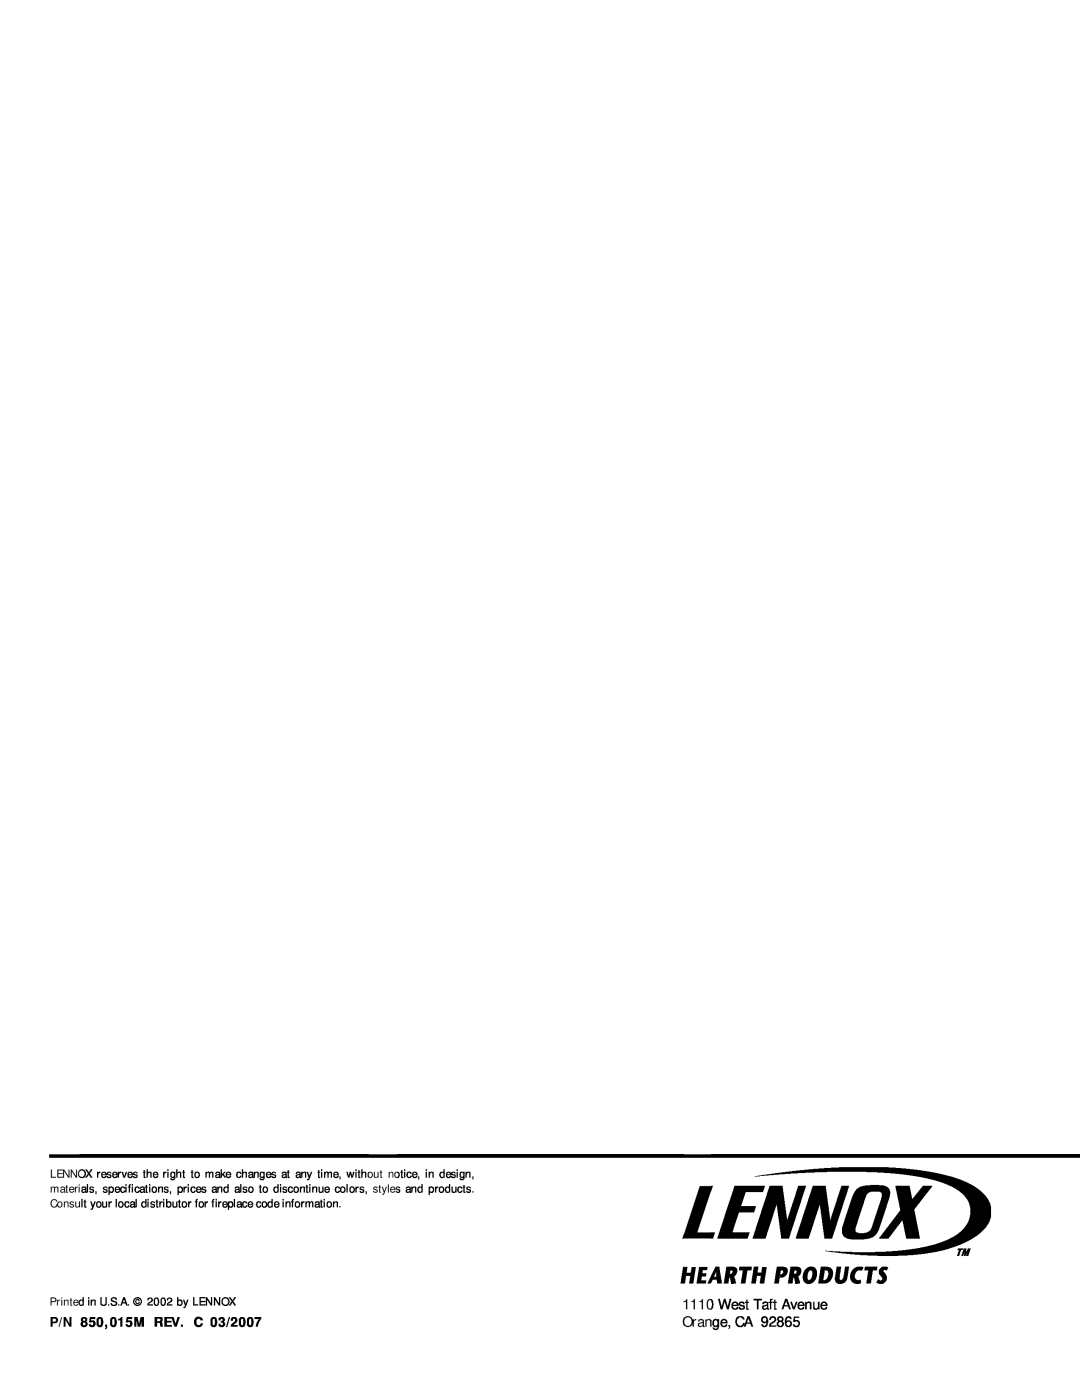 Lennox Hearth LSO-43 installation instructions P/N 850,015M REV. C 03/2007, Orange, CA 